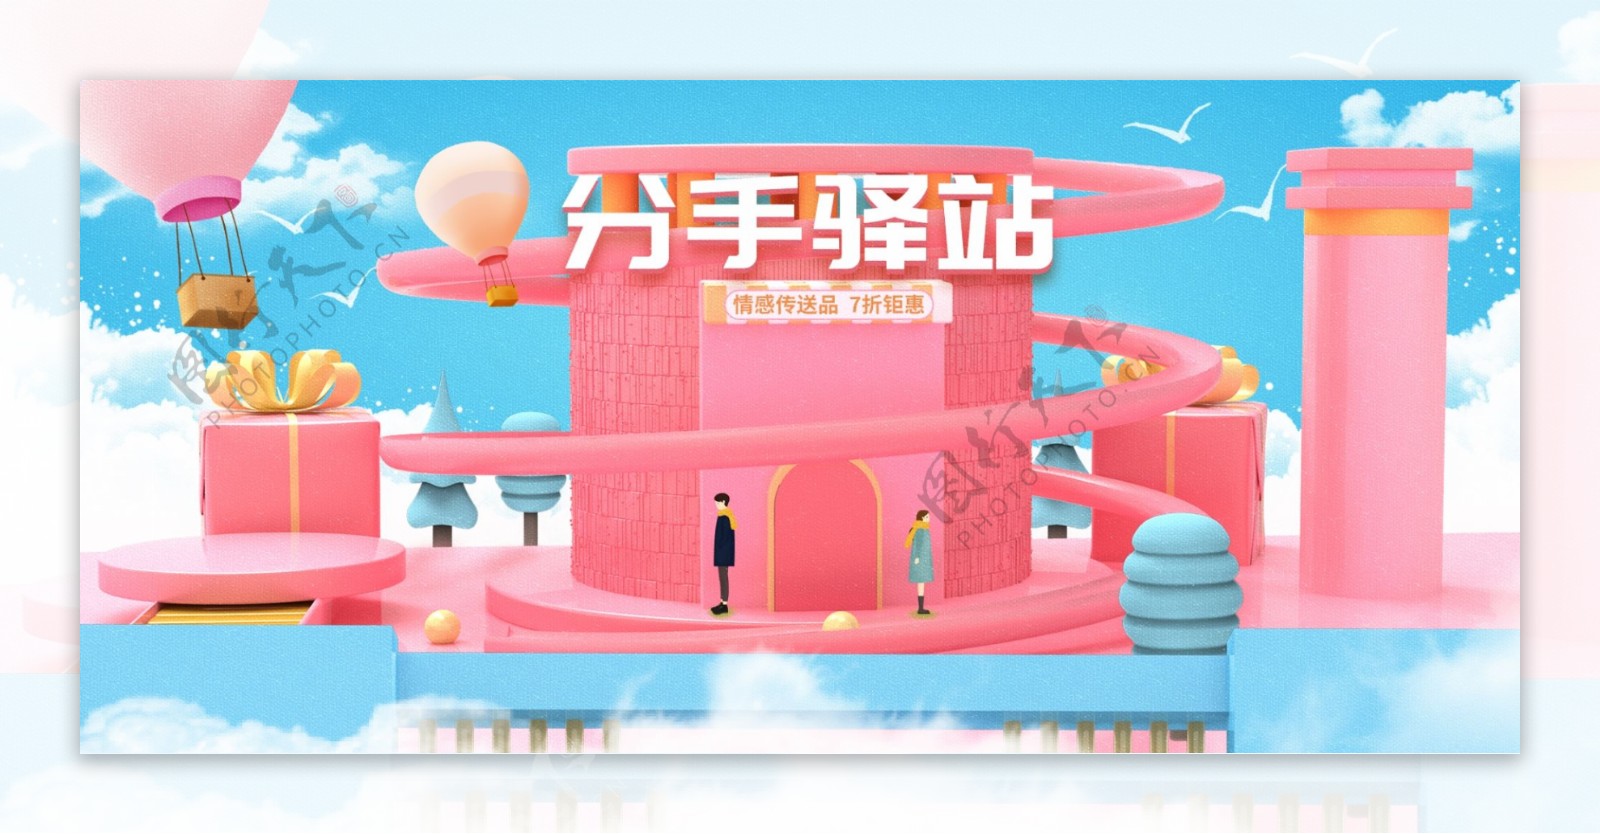 C4D渲染分手快乐电商海报banner